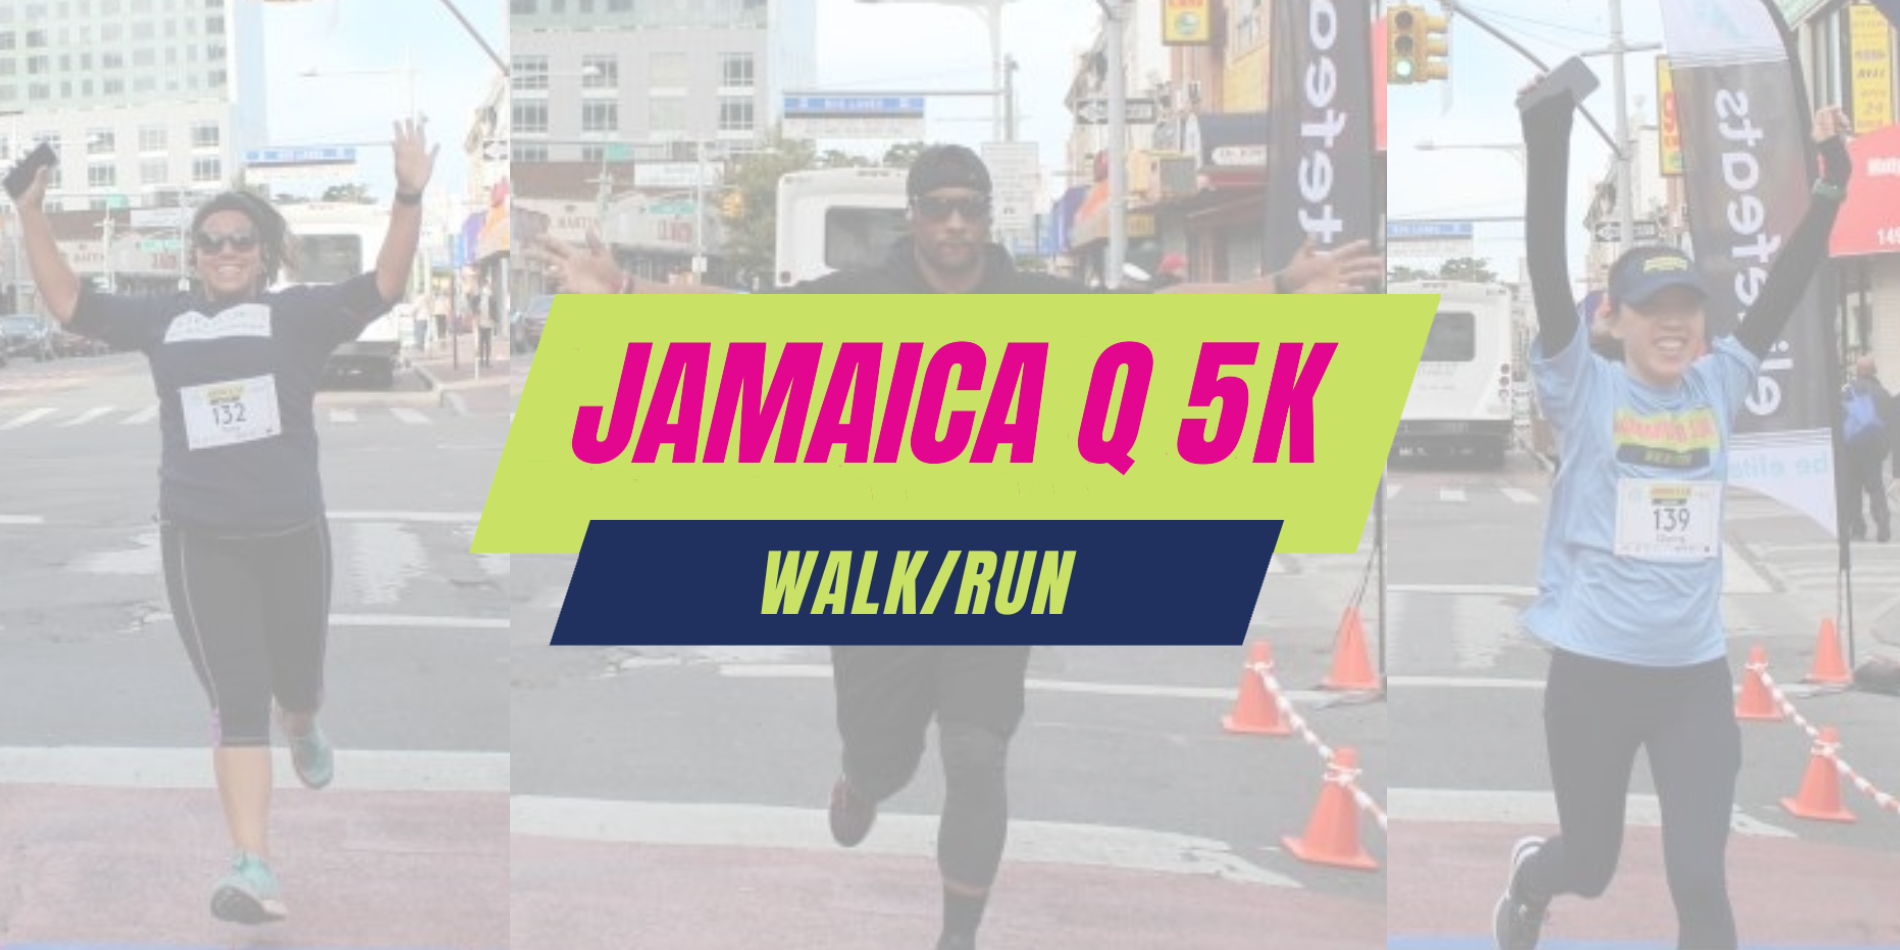 Jamaica Q 5K Walk/Run promotional image